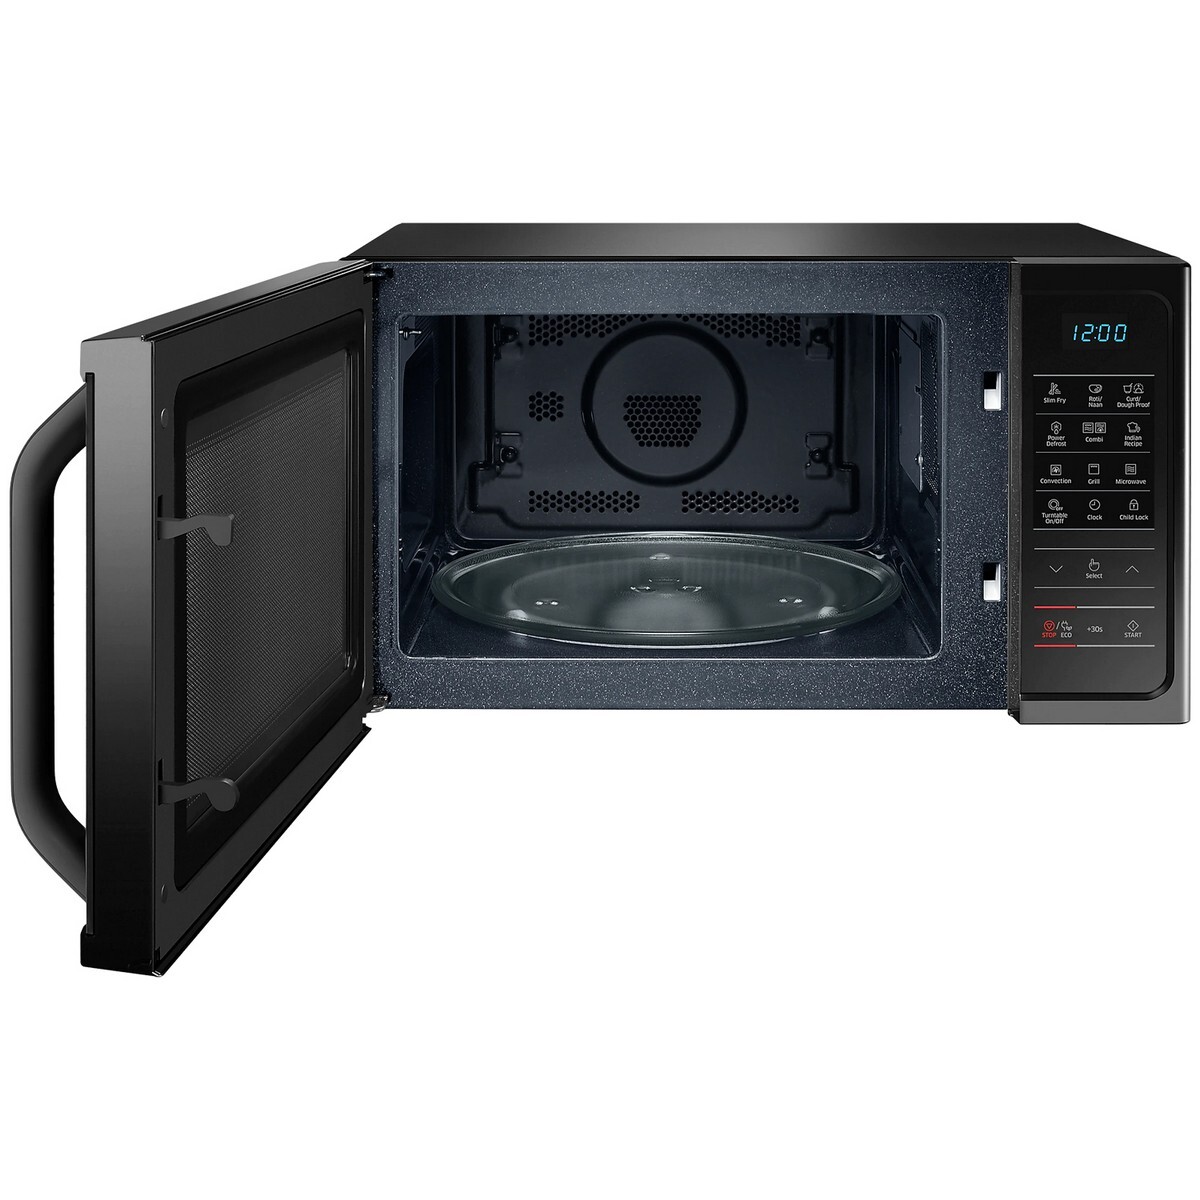 Samsung MC28A5033CK Microwave Oven 28Litre